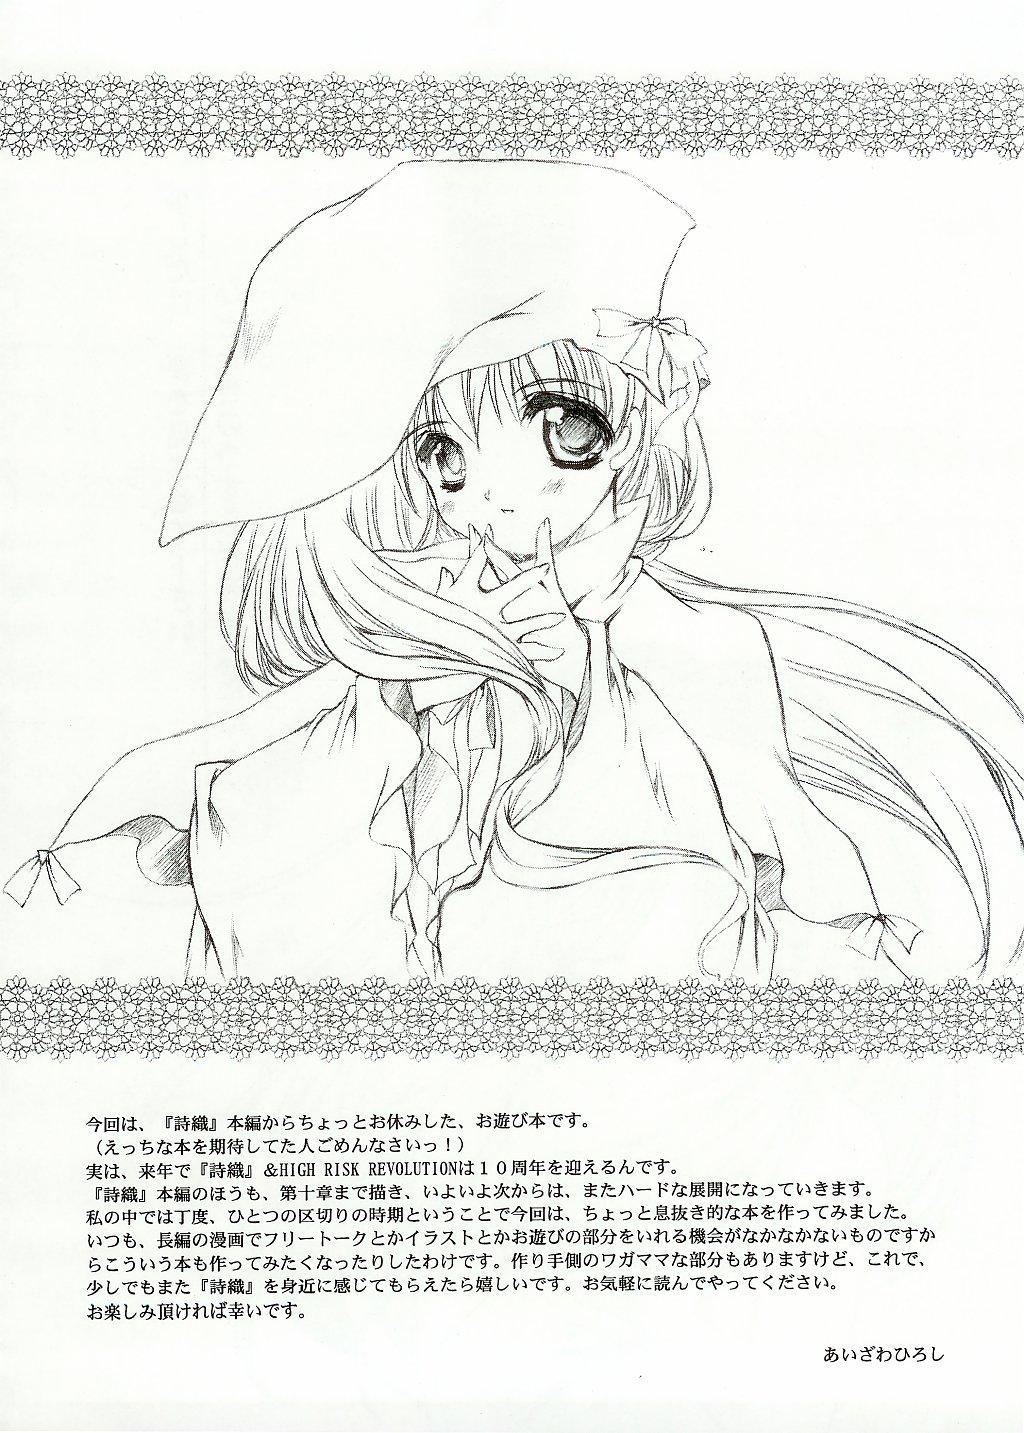 Scandal Shiori Bonus Track 10 shuunenn Kinenn Zenyasai bon - Tokimeki memorial Sensual - Page 4